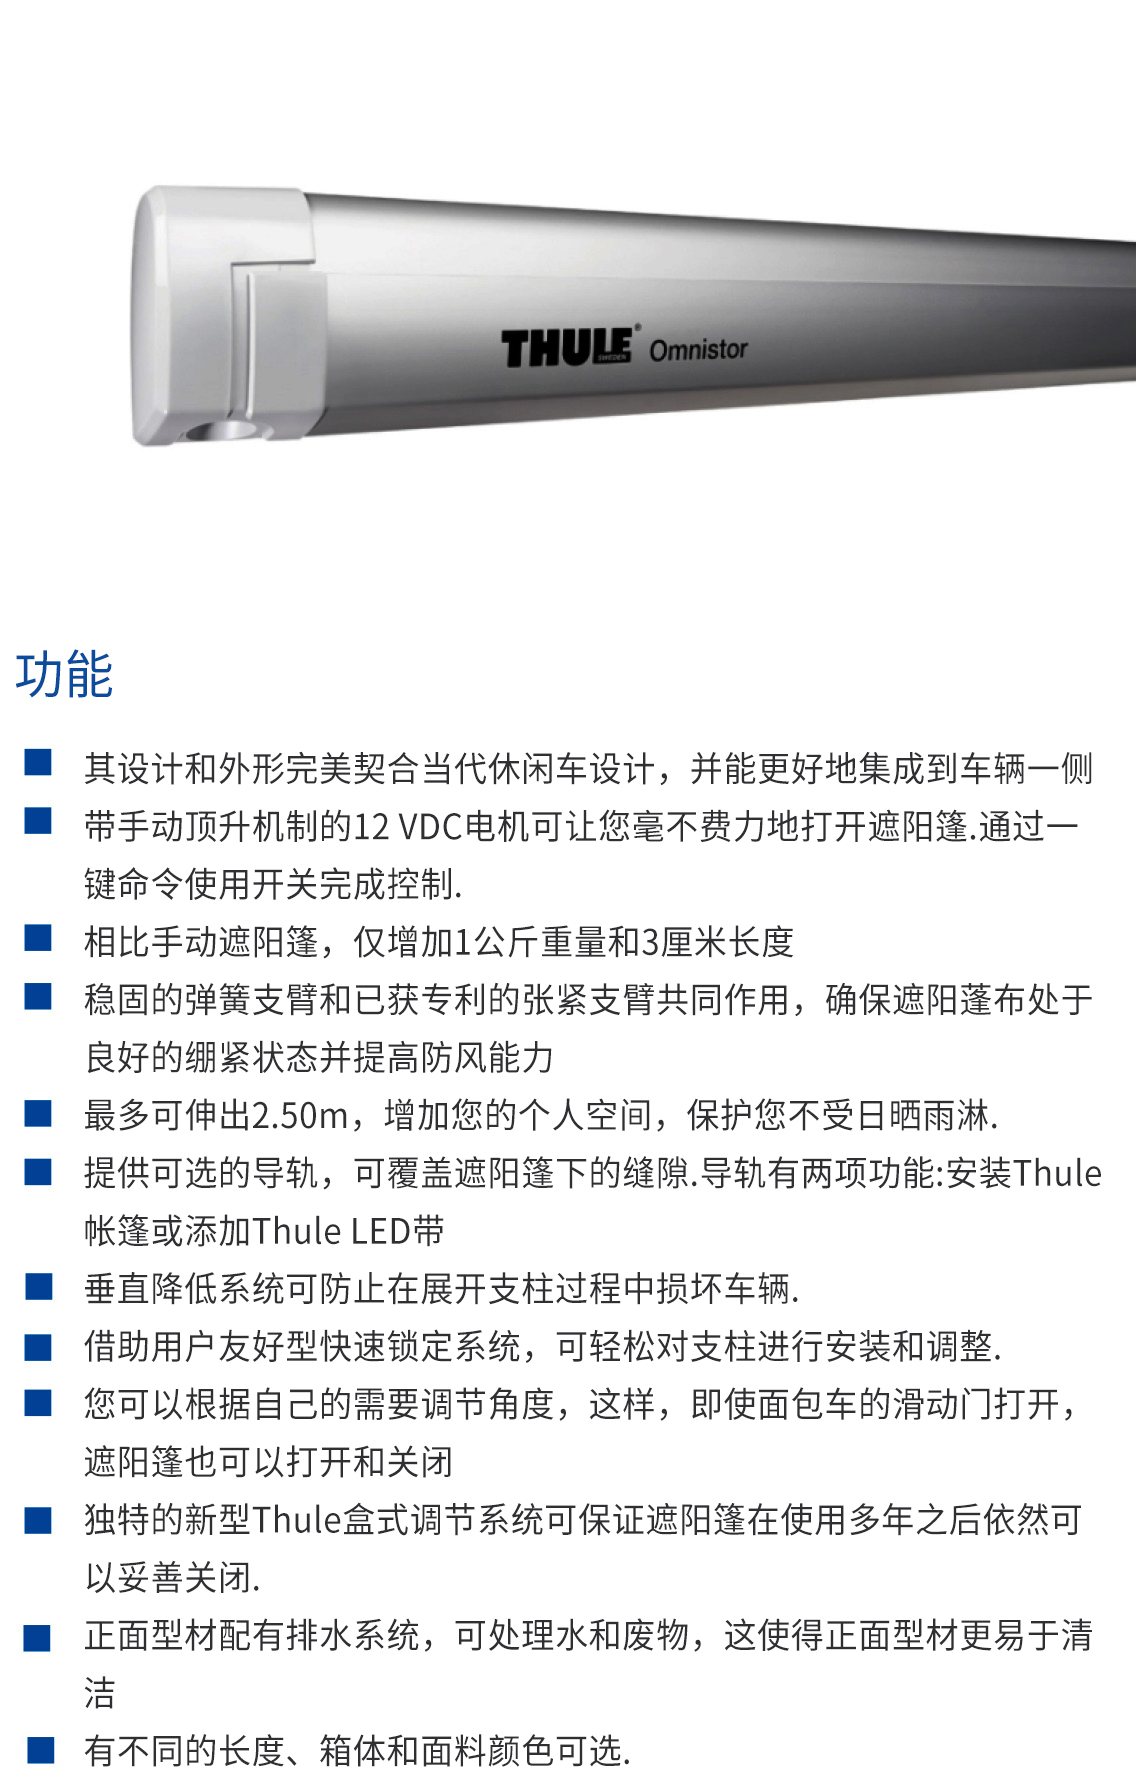 THULE-OMNISTOR-5200电动遮阳篷功能.jpg